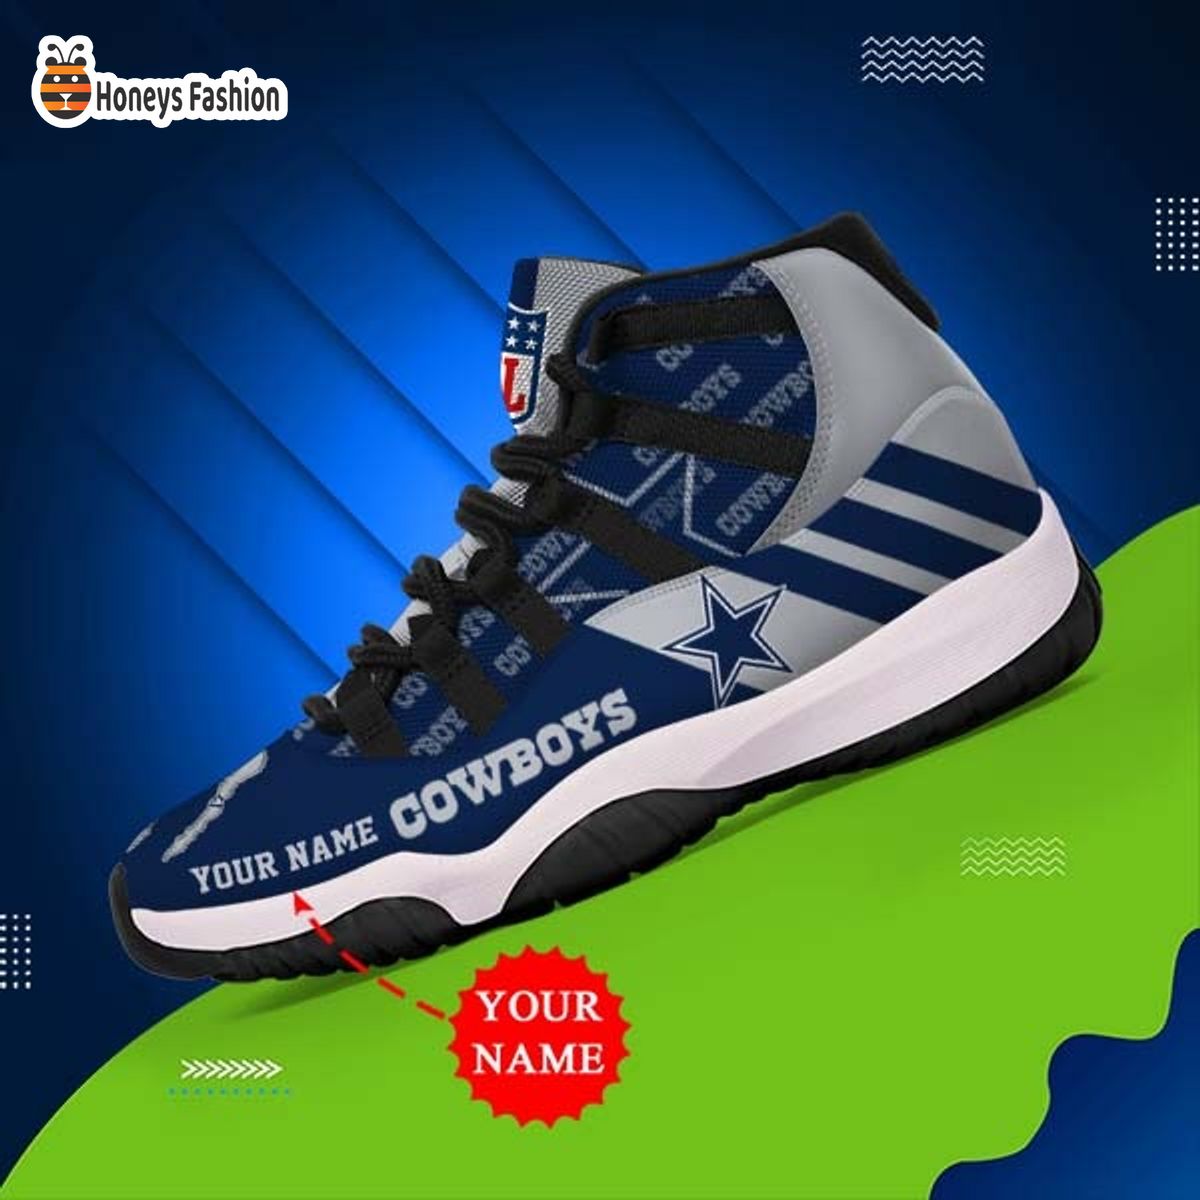 Dallas Cowboys NFL Adidas Personalized Air Jordan 11 Shoes